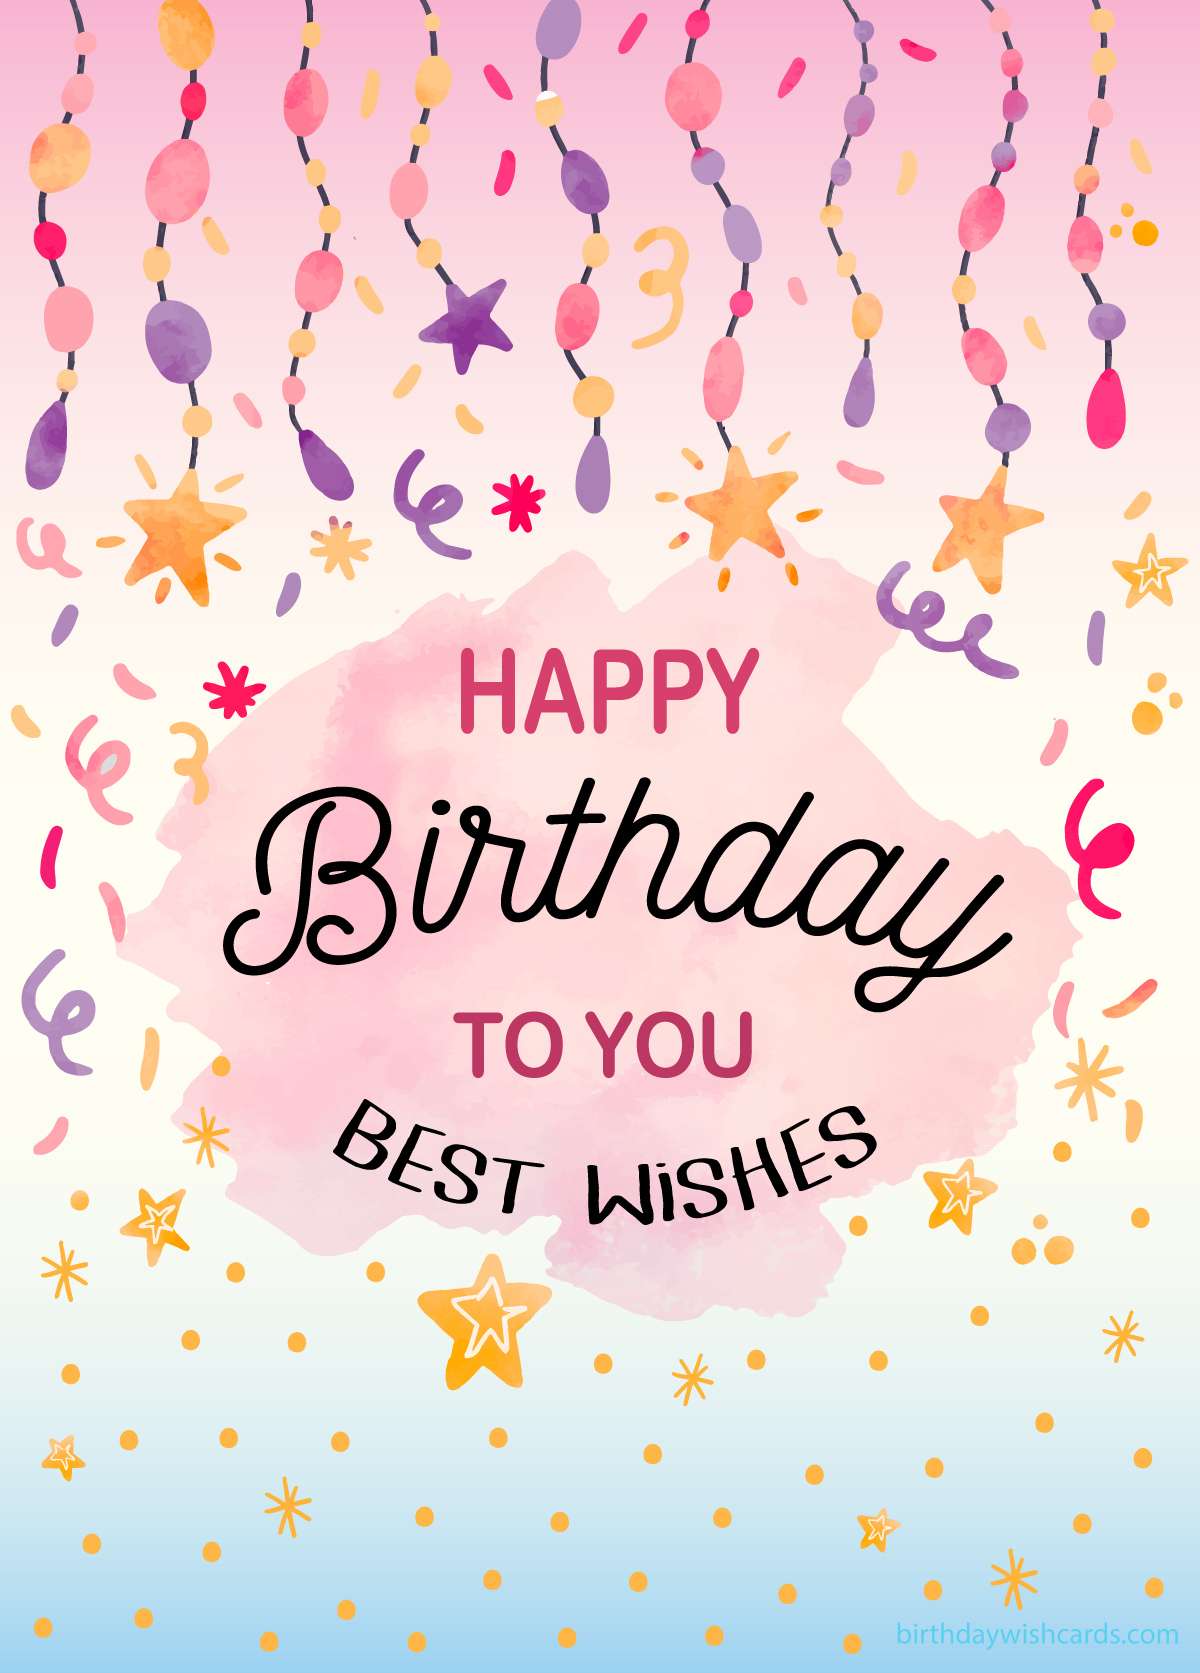 happy birthday to you best wishes » Birthday Wish Cards